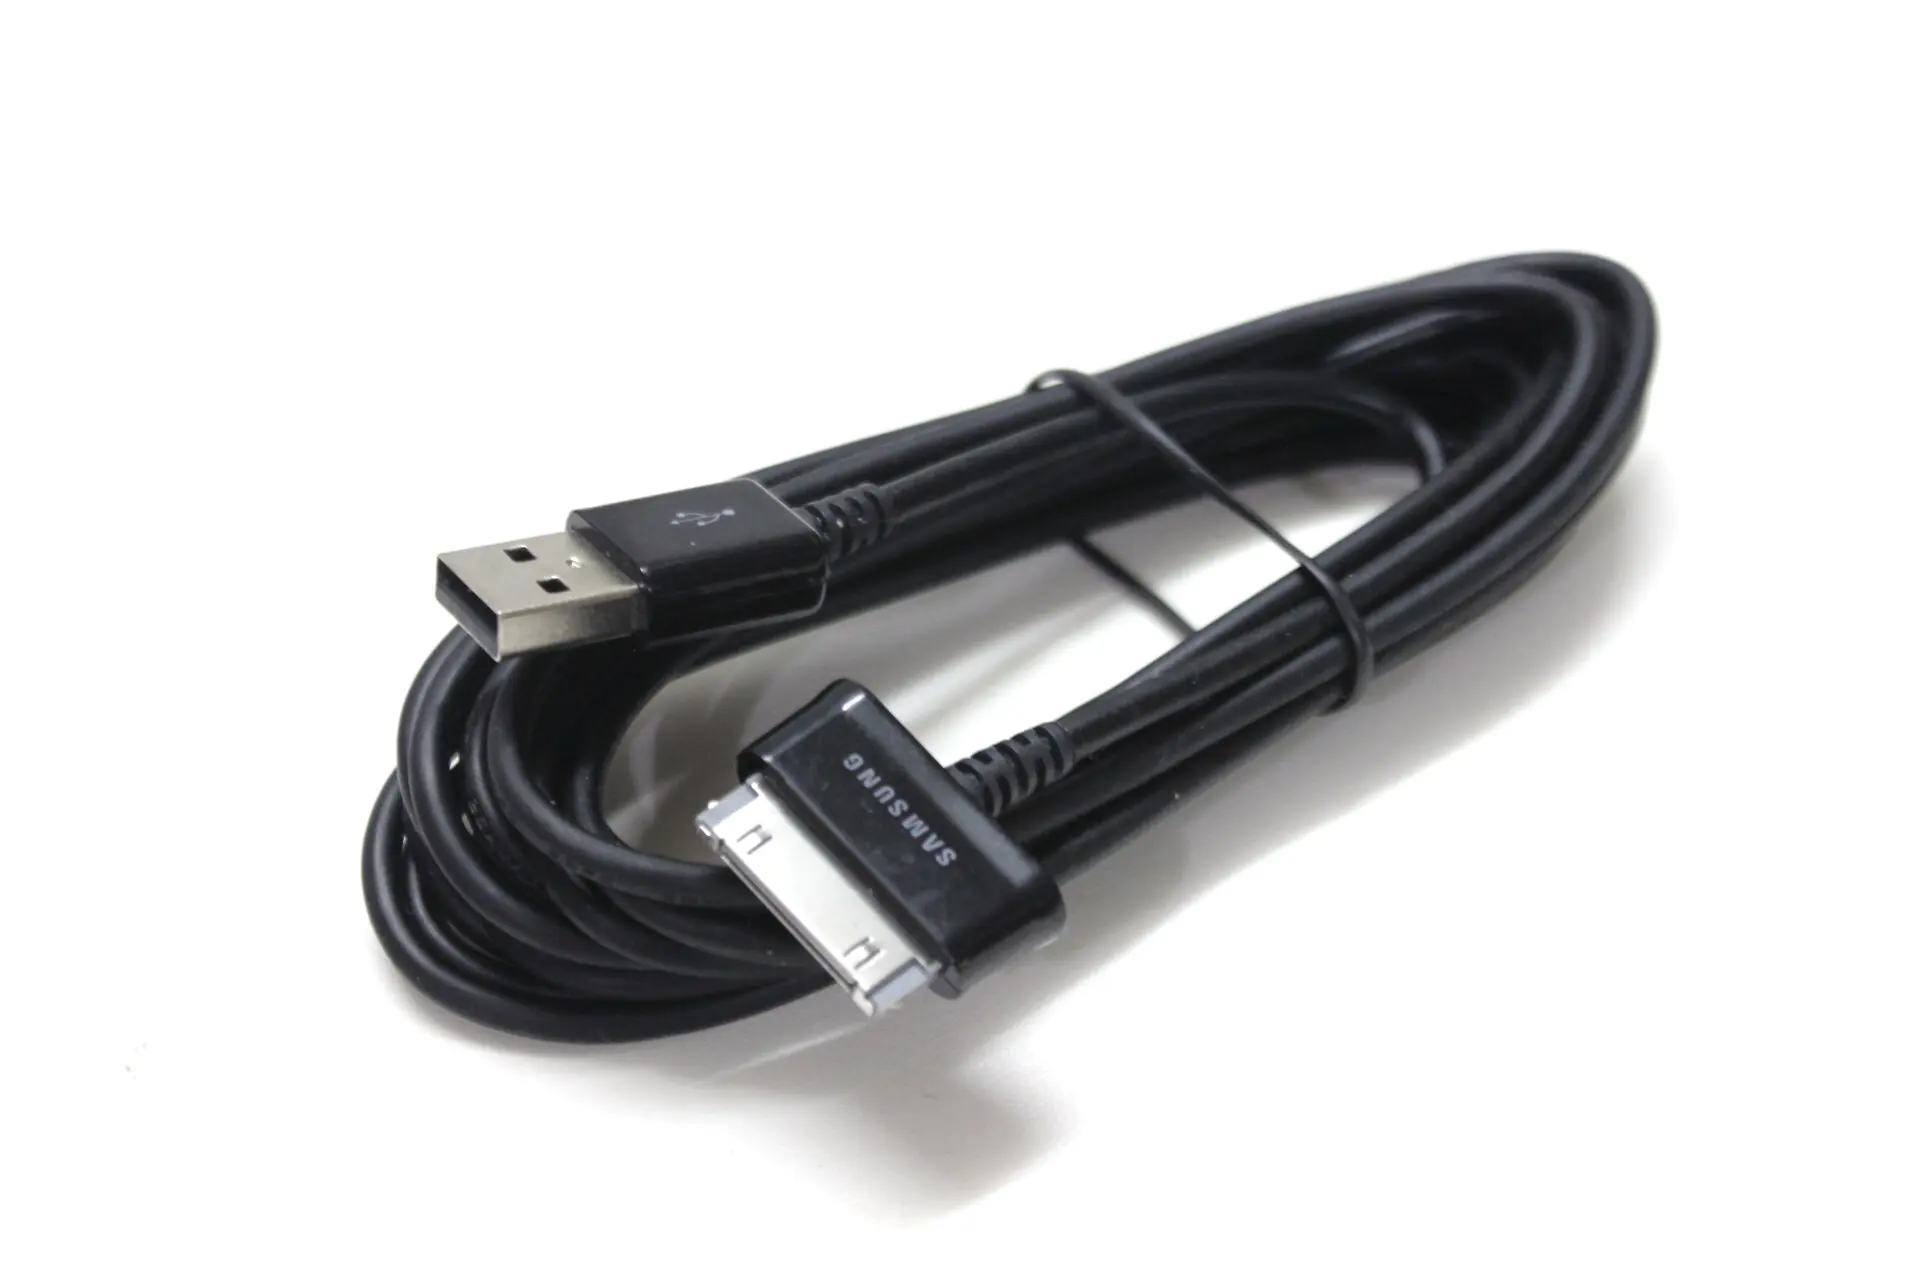 USB-кабель для зарядки и передачи данных для Samsung Galaxy Note 10,1 GT-N8000 N8010 P1000 P7500 P7510 P3100 P3110 P3113 P5100 P5110 P5113